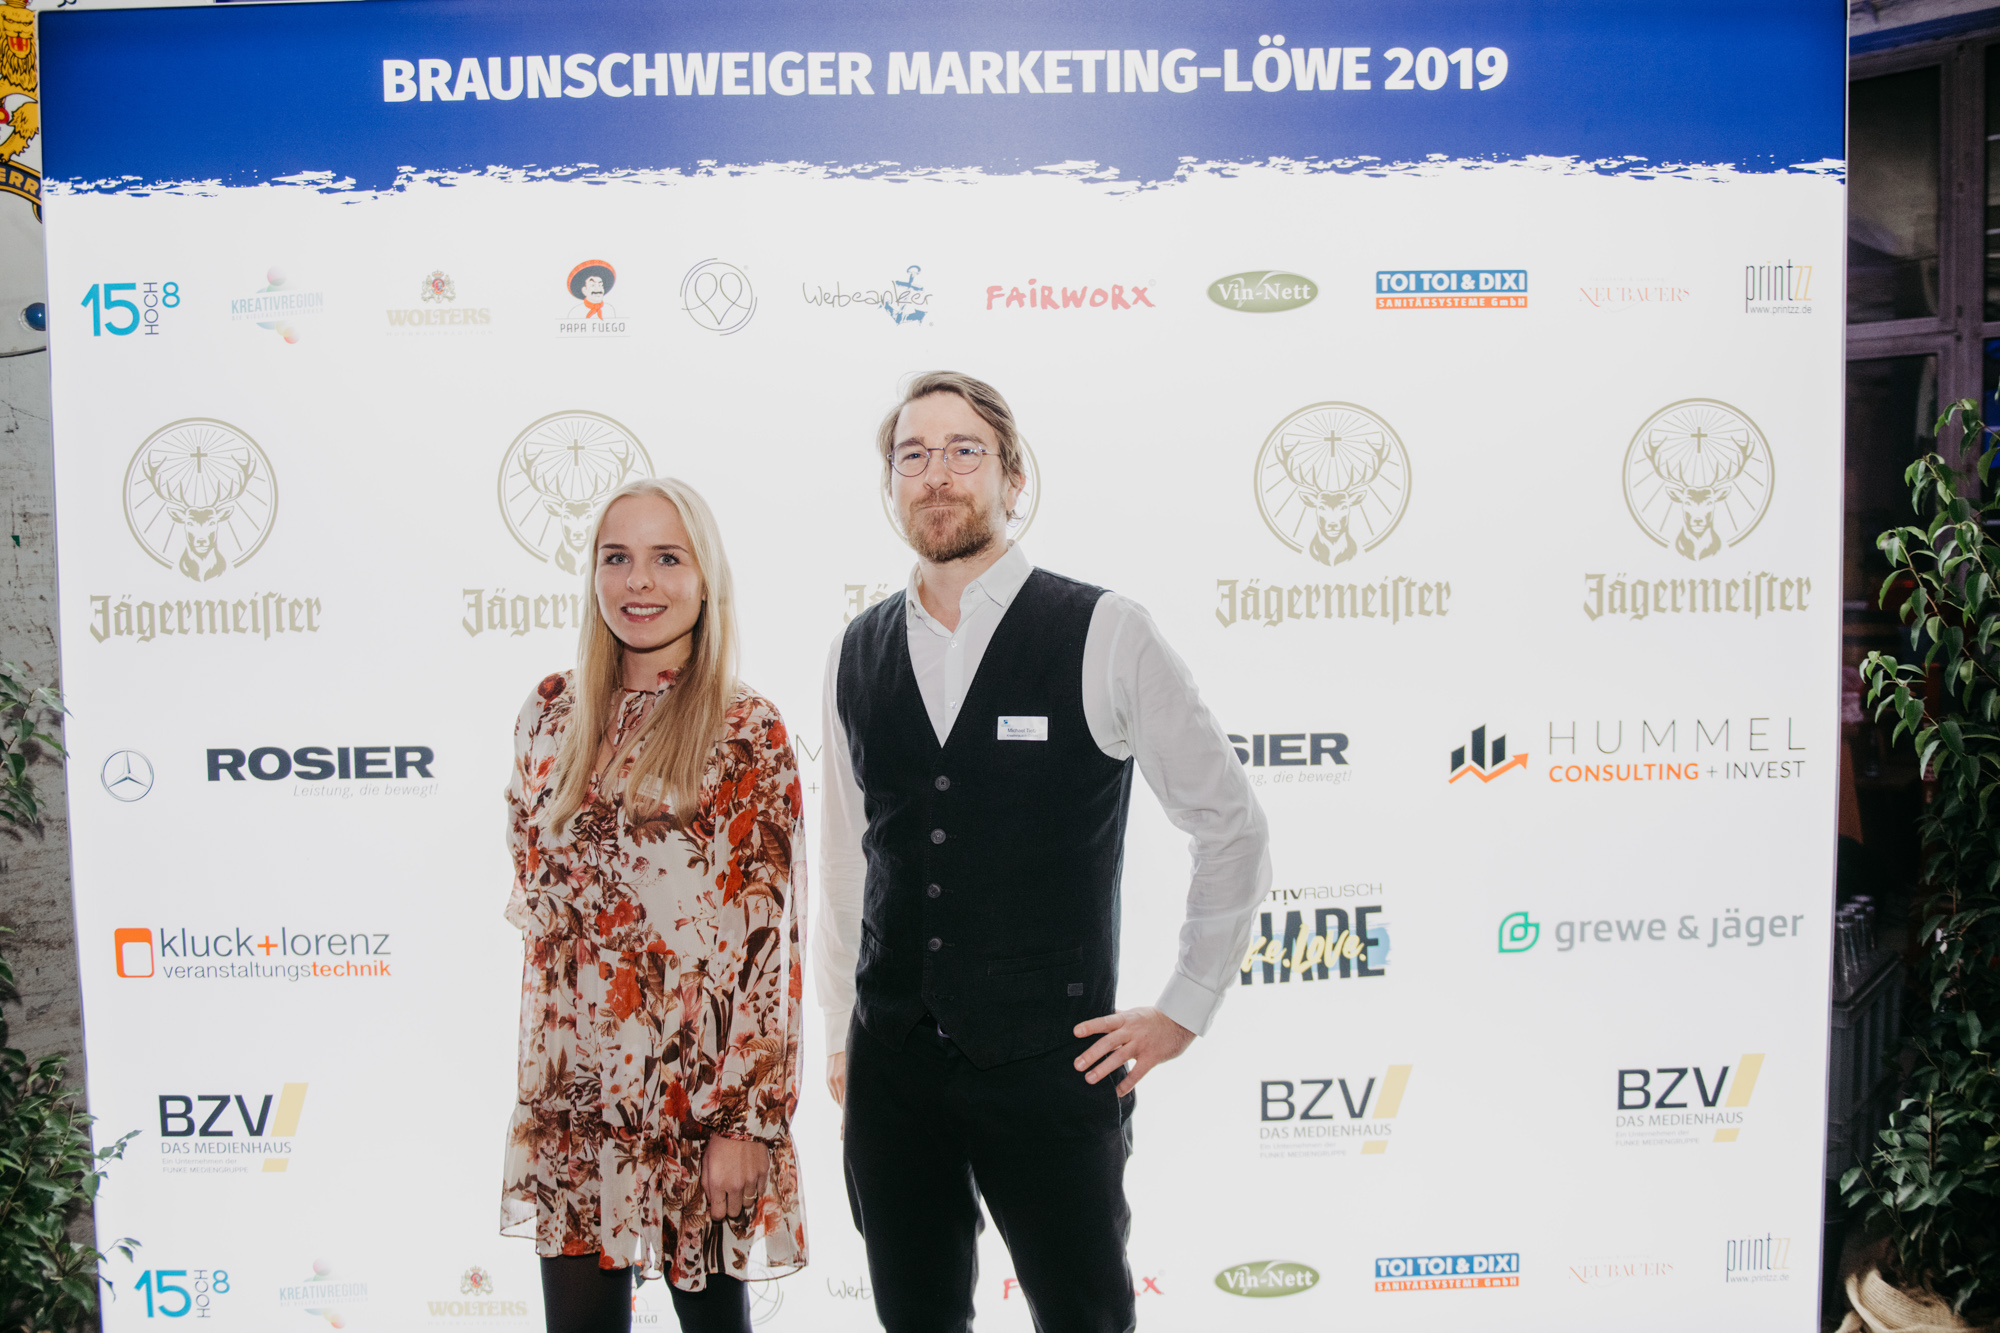 MCBS Marketing-Loewe 2019 small 62